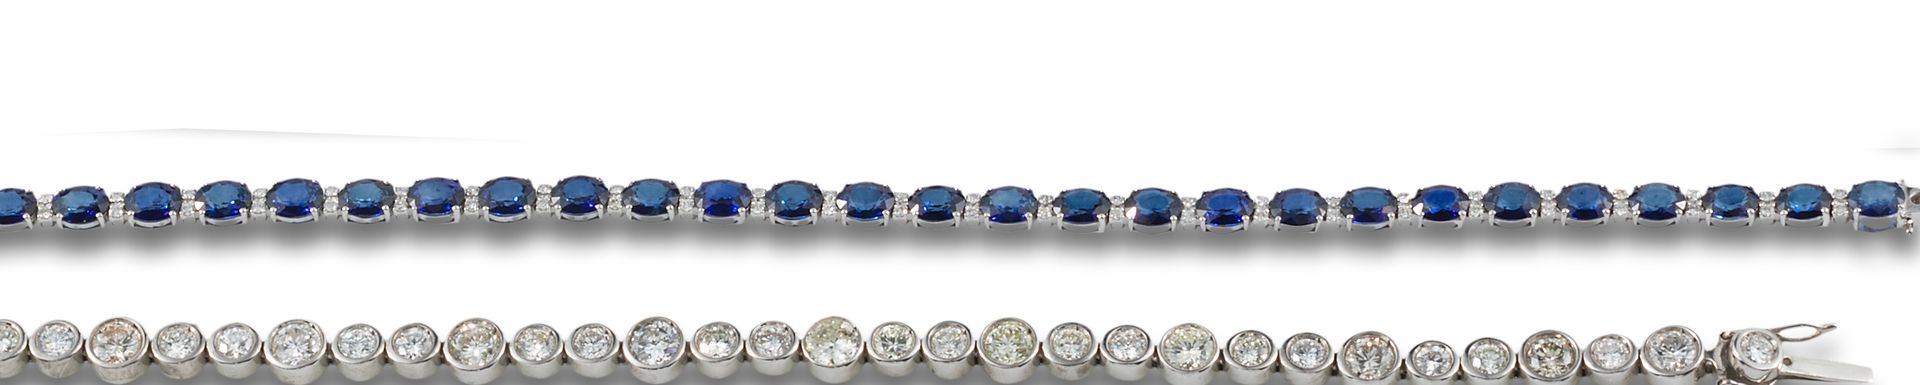 18 kt white gold riviere bracelet formed by princess cut diamonds set in a rail.&hellip;